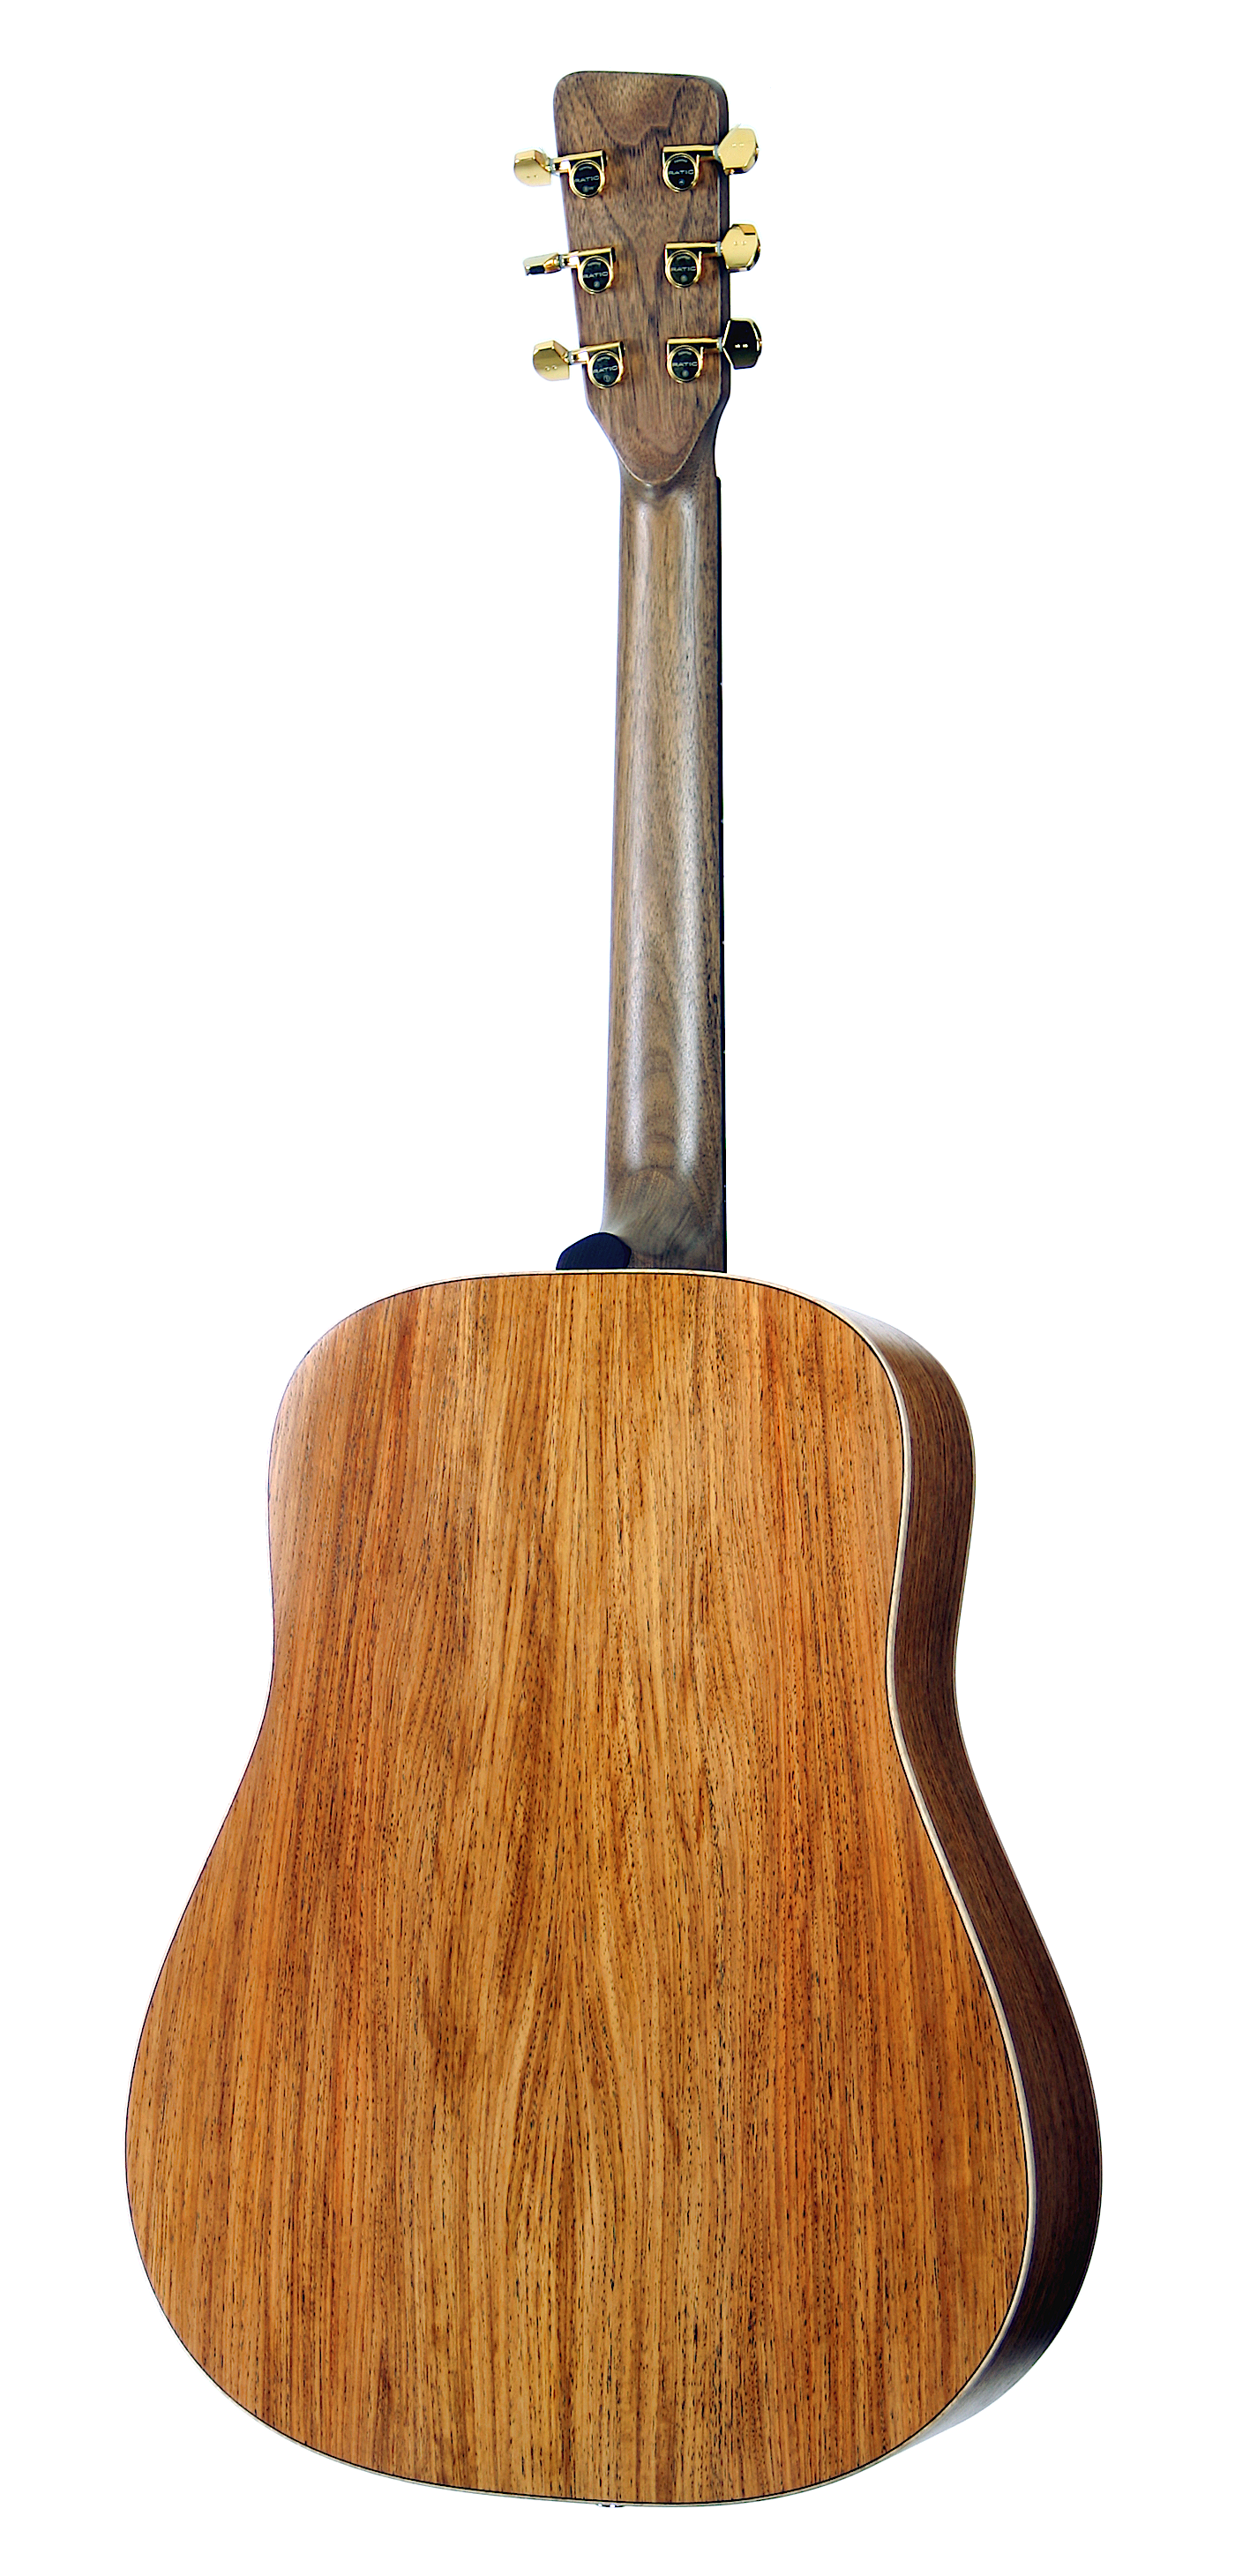 NORA™ Dreadnought, solid wood acoustic guitar. Red cedar soundboard, black walnut neck, rosewood body